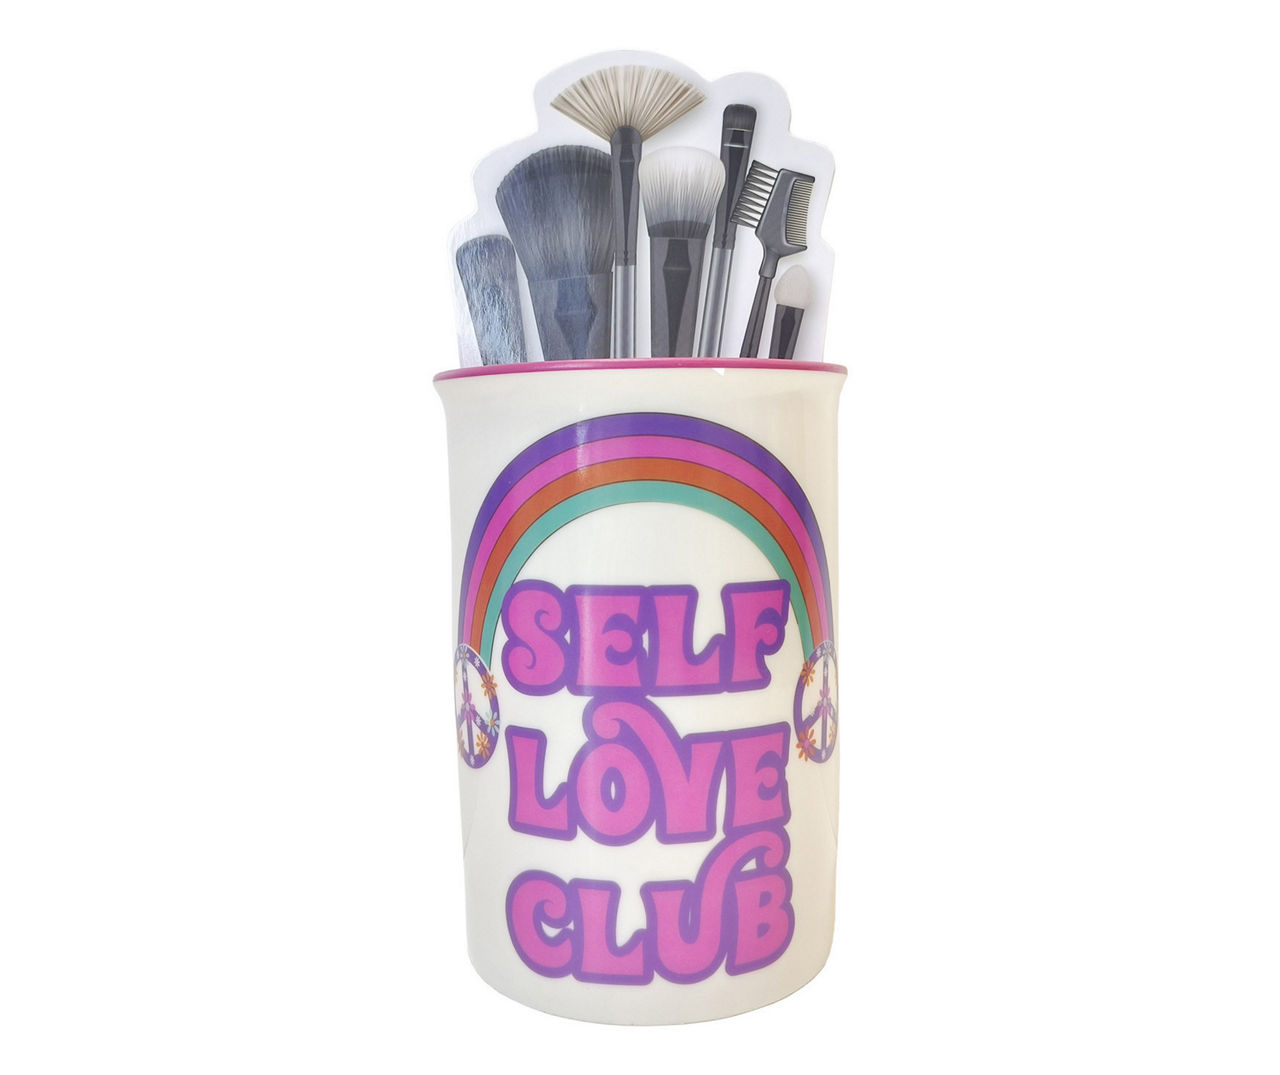 "Self Love Club" Ceramic Makeup Brush Holder